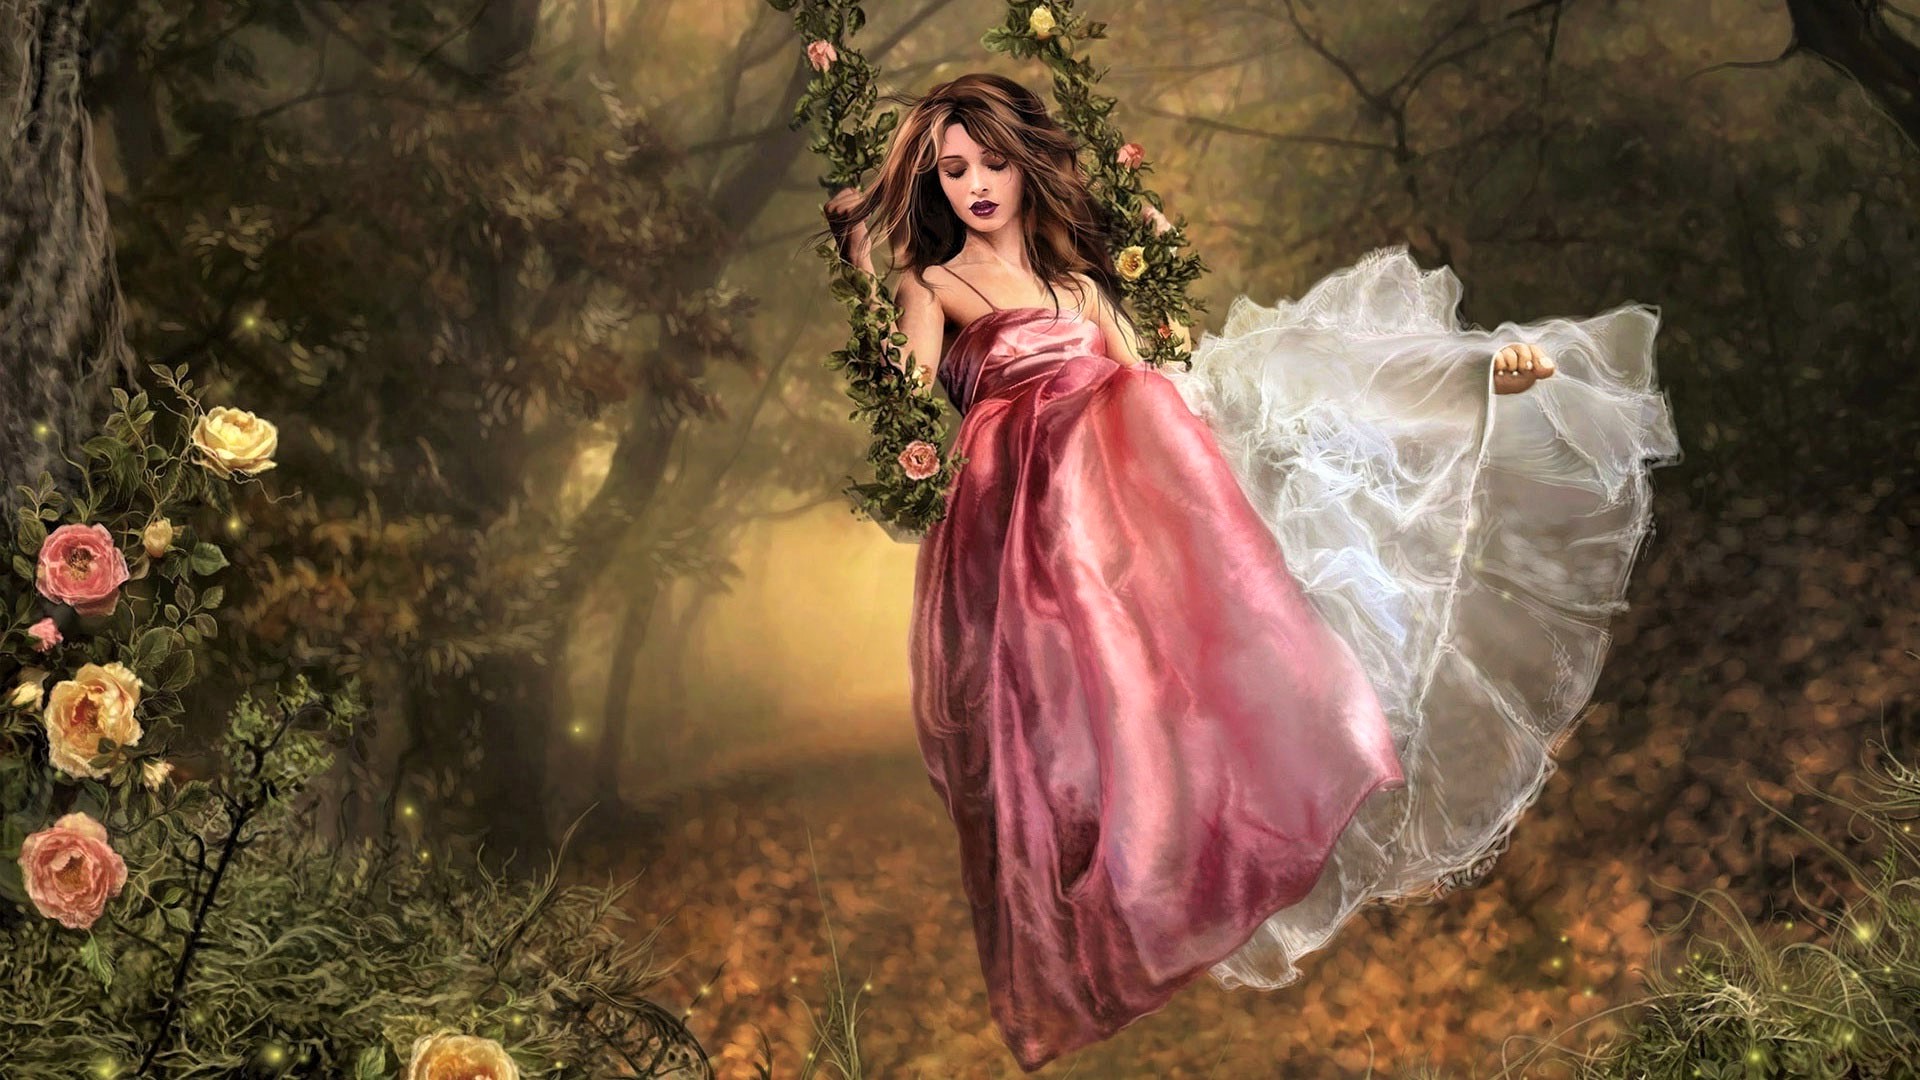 Girl on Rose Swing in Forest